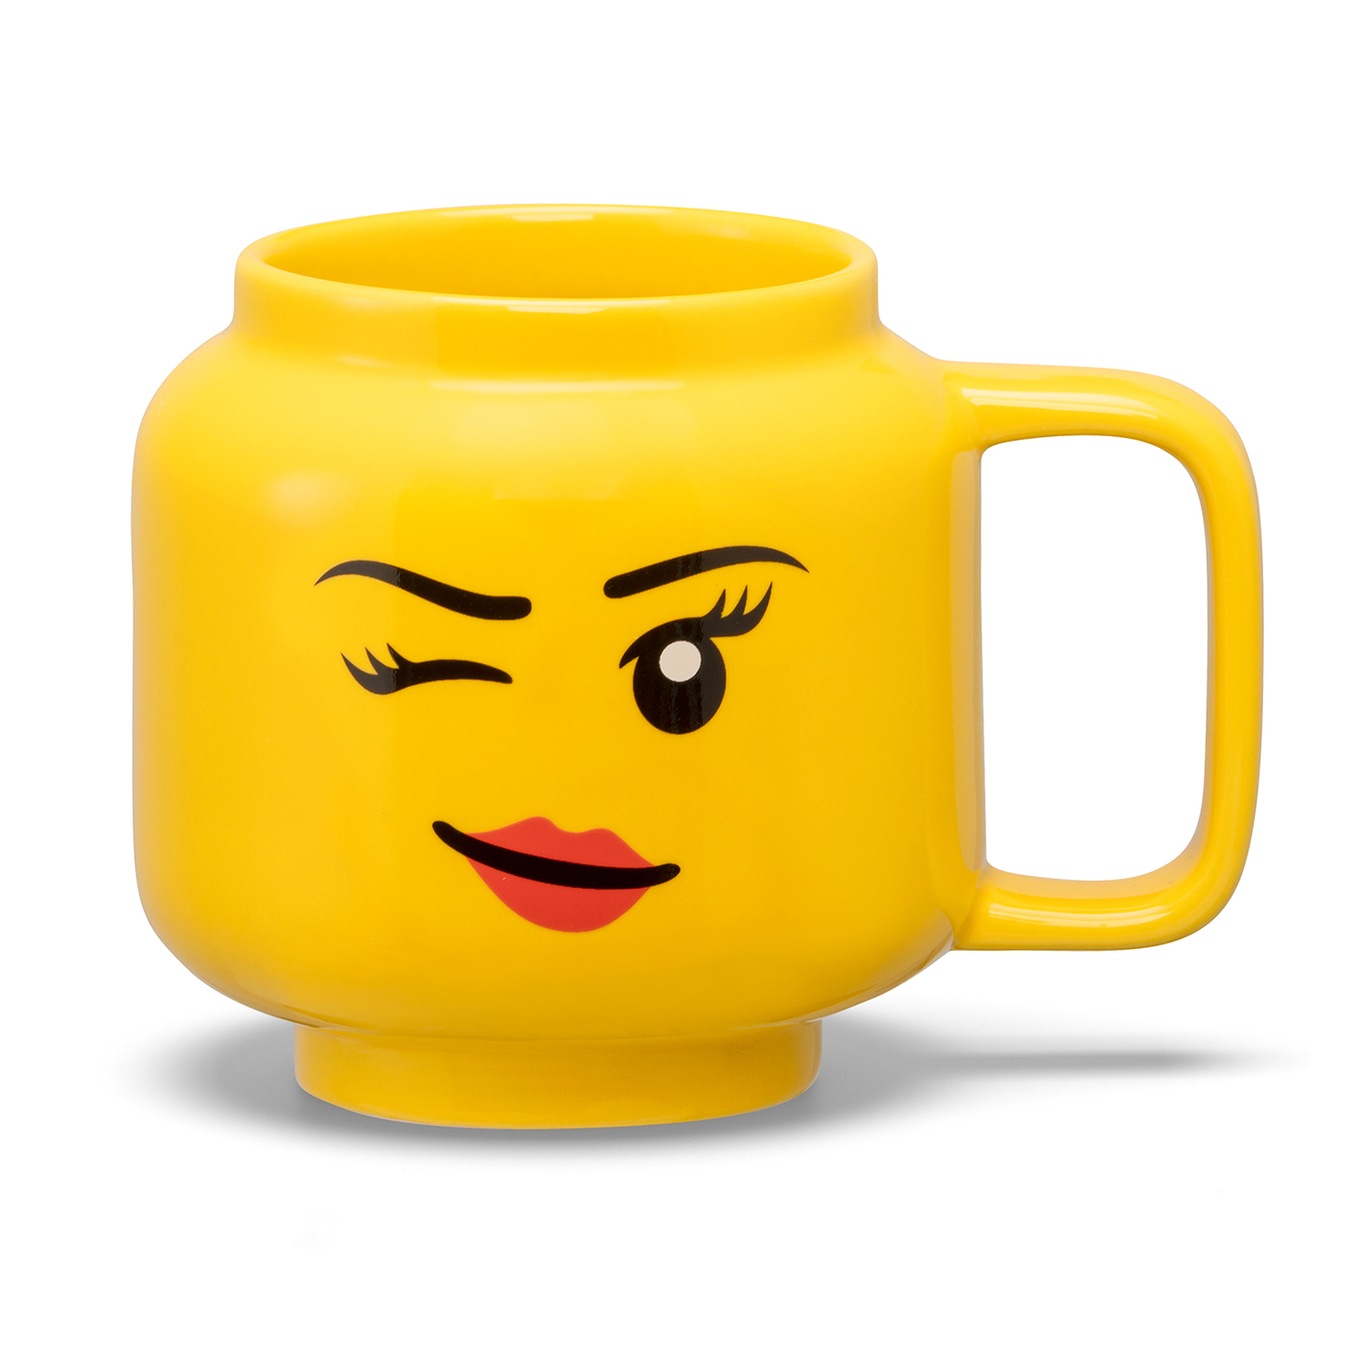 LEGO Ceramic Mug Small Boy Muki Keltainen, S